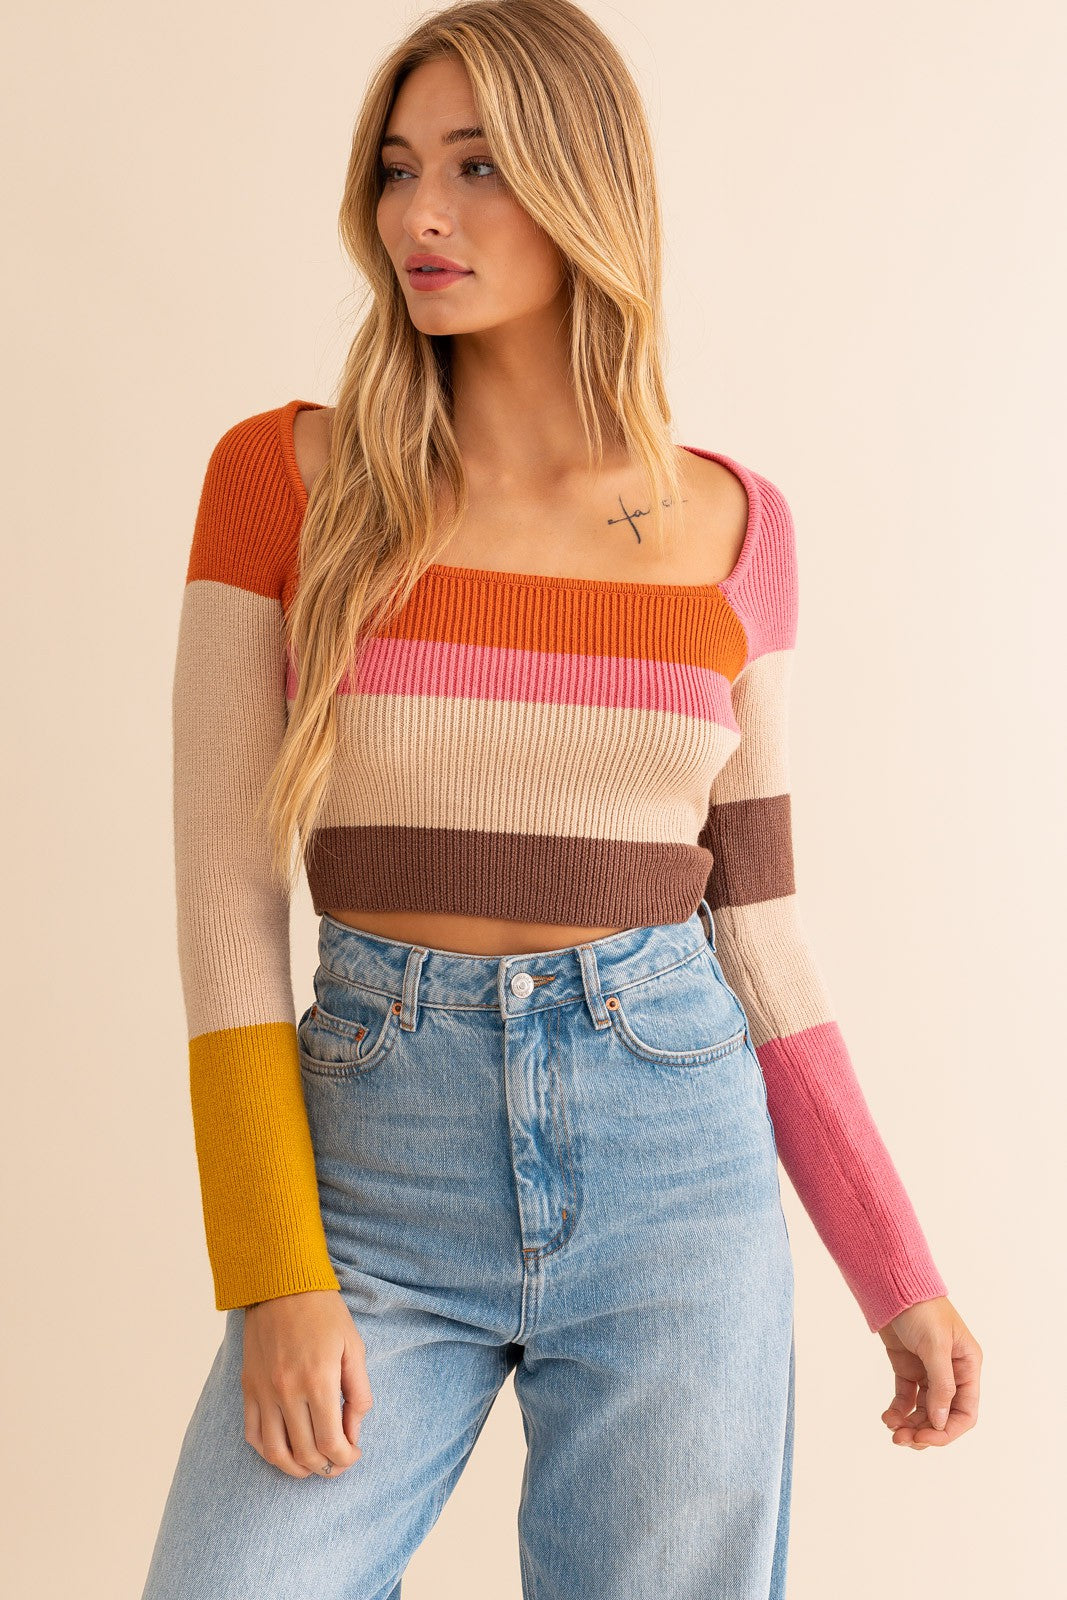 zSALE Arlo Long Sleeve Color Block Stripe Knit Crop Top - Rust Multi